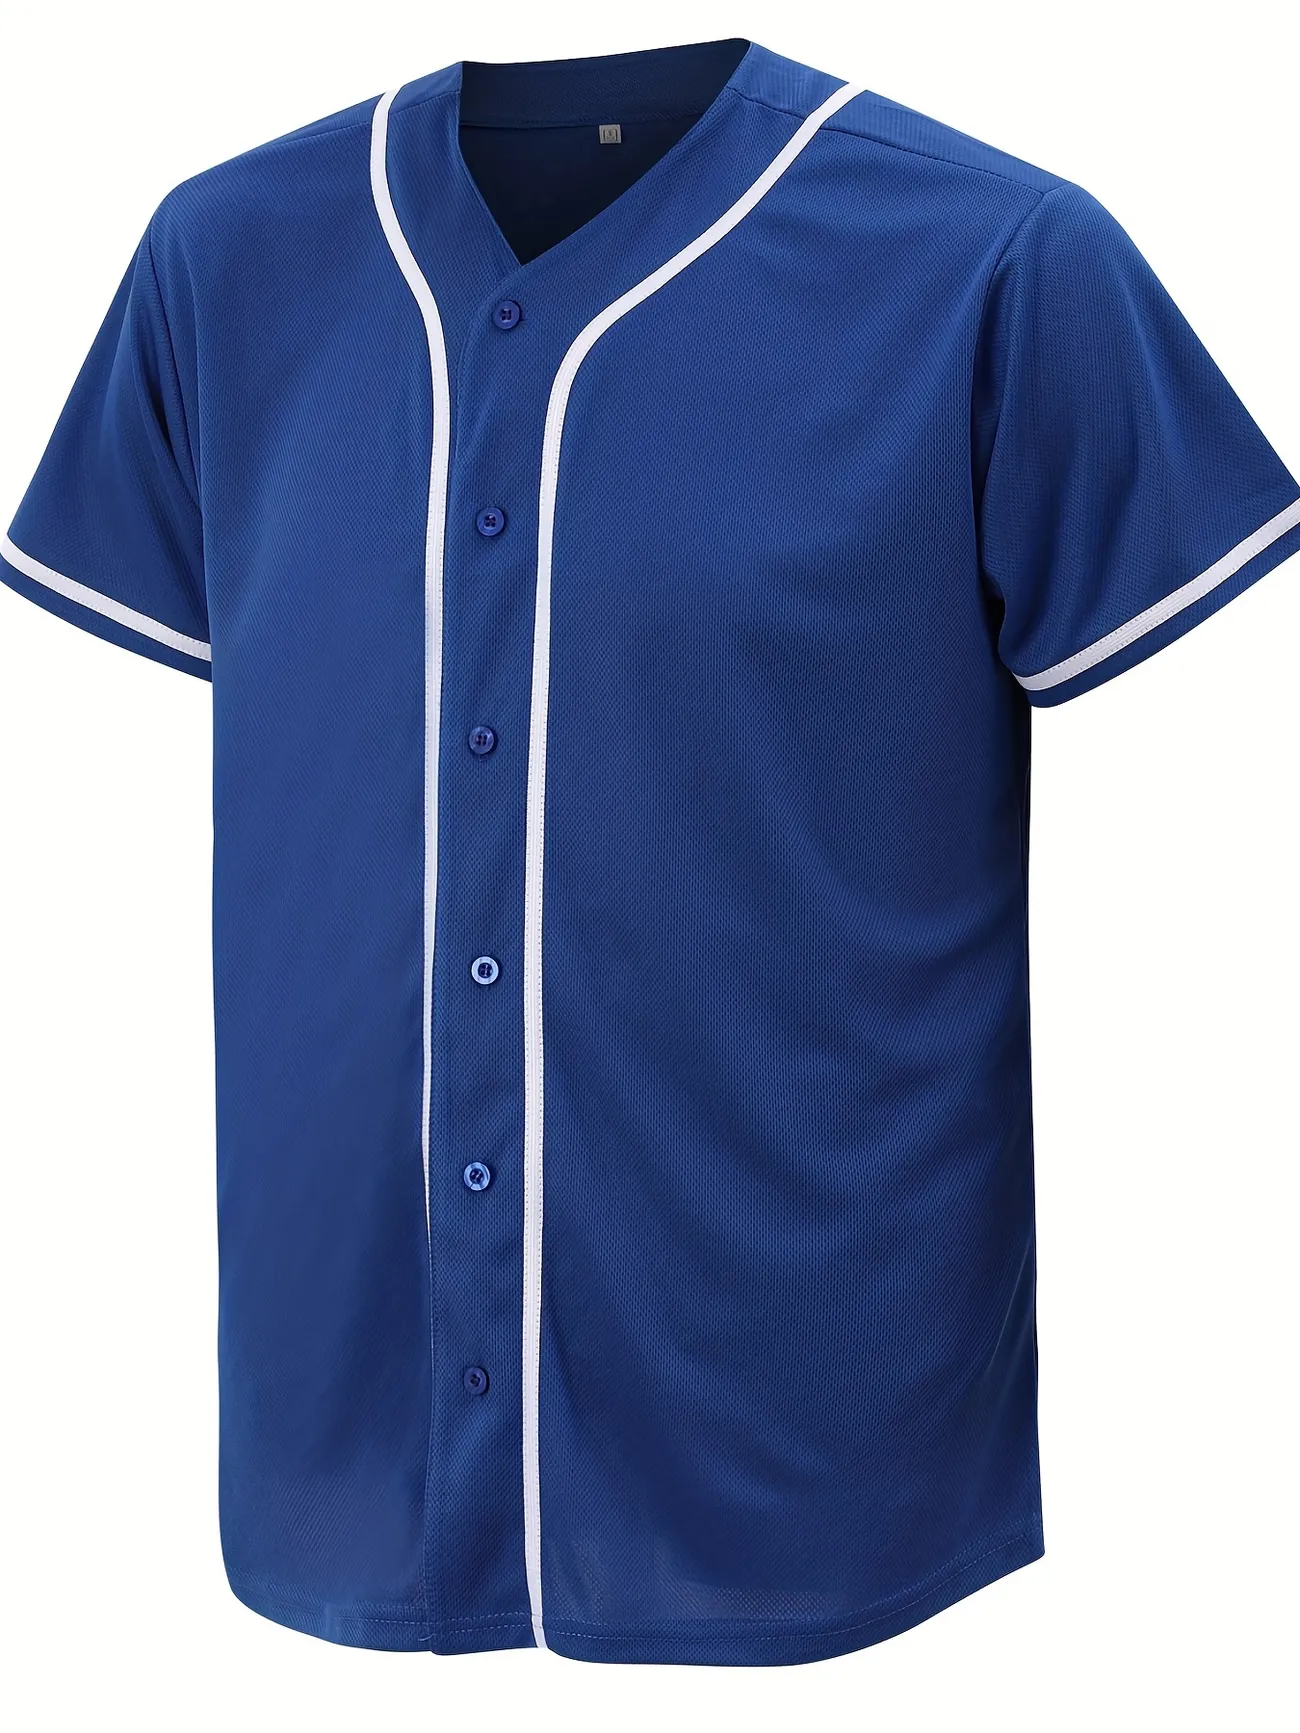 blank blue baseball jersey